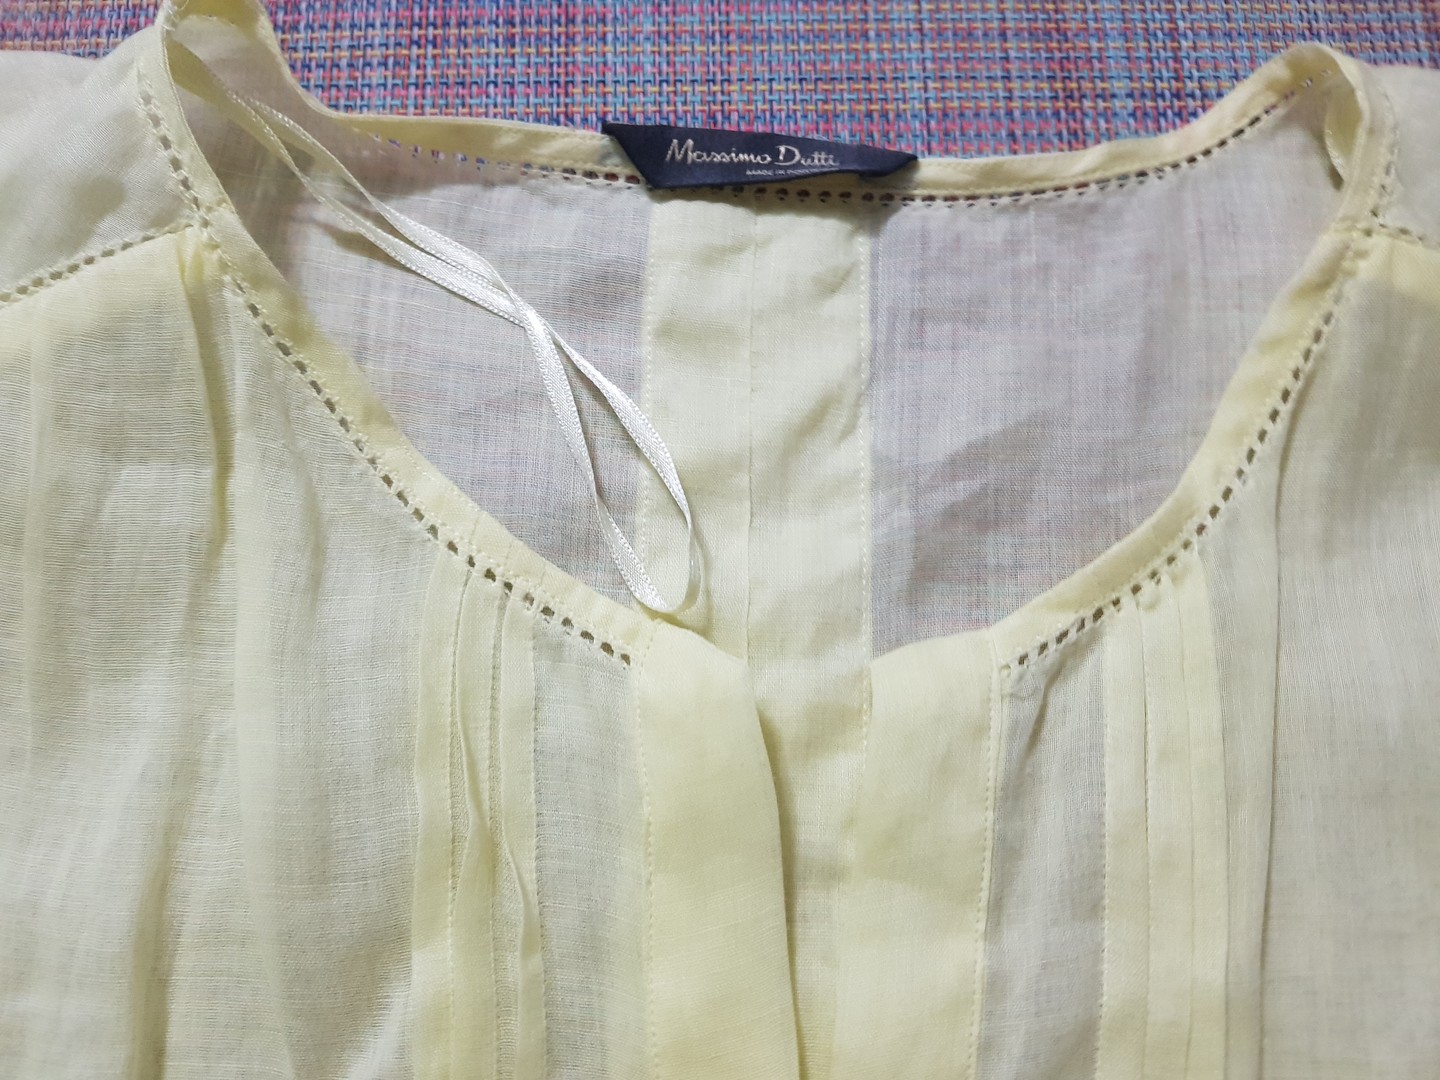 Delicada blusa sin mangas, color amarillo tierno, Massimo Dutti de España. 1